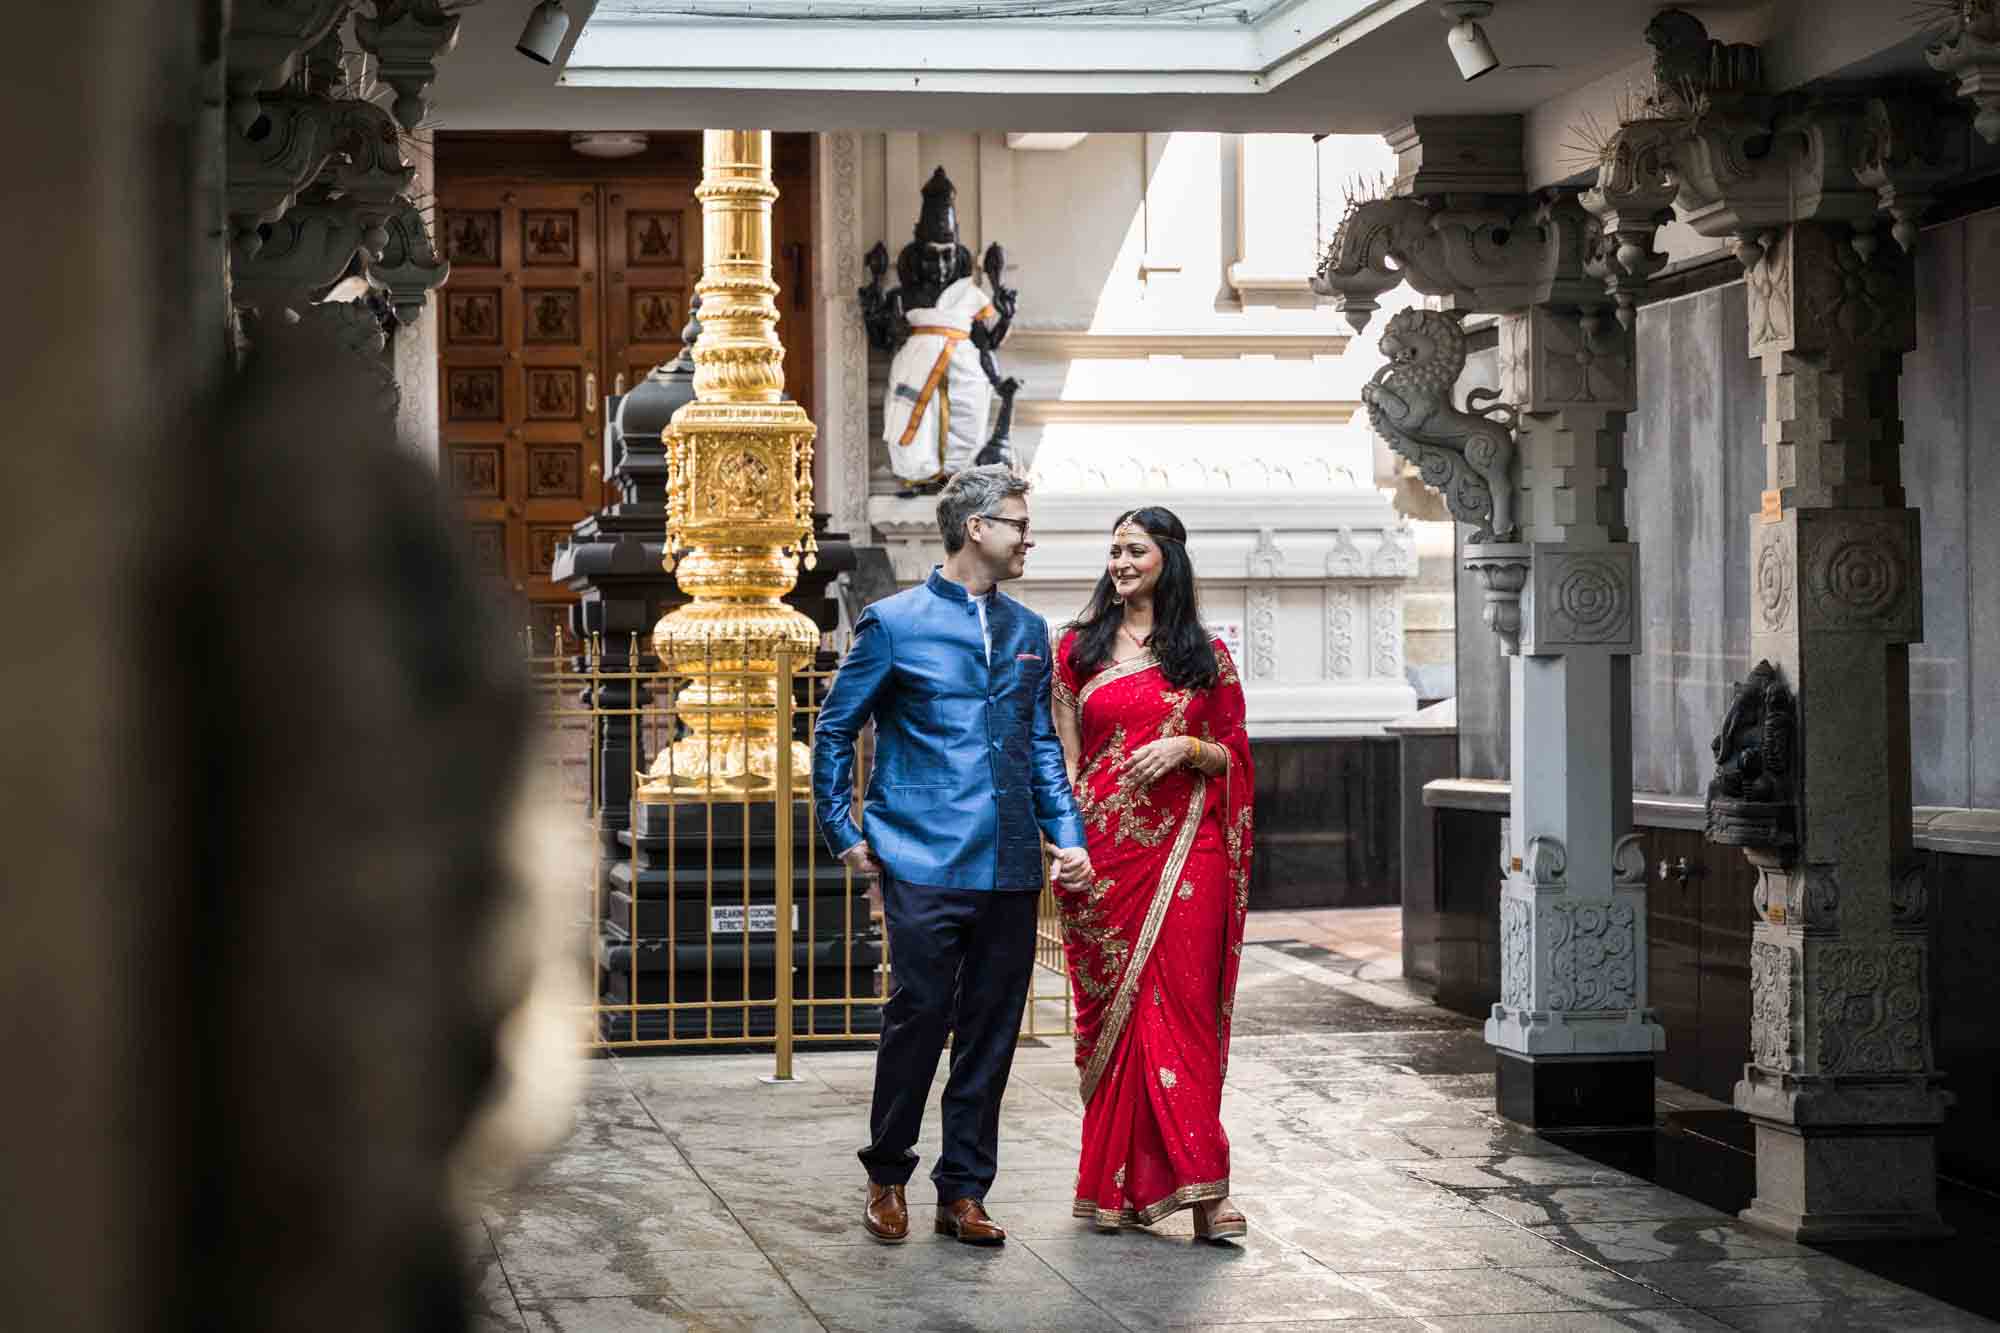 Hindu Temple Society of North America wedding photos of bride in red sari walking with groom in blue jacket